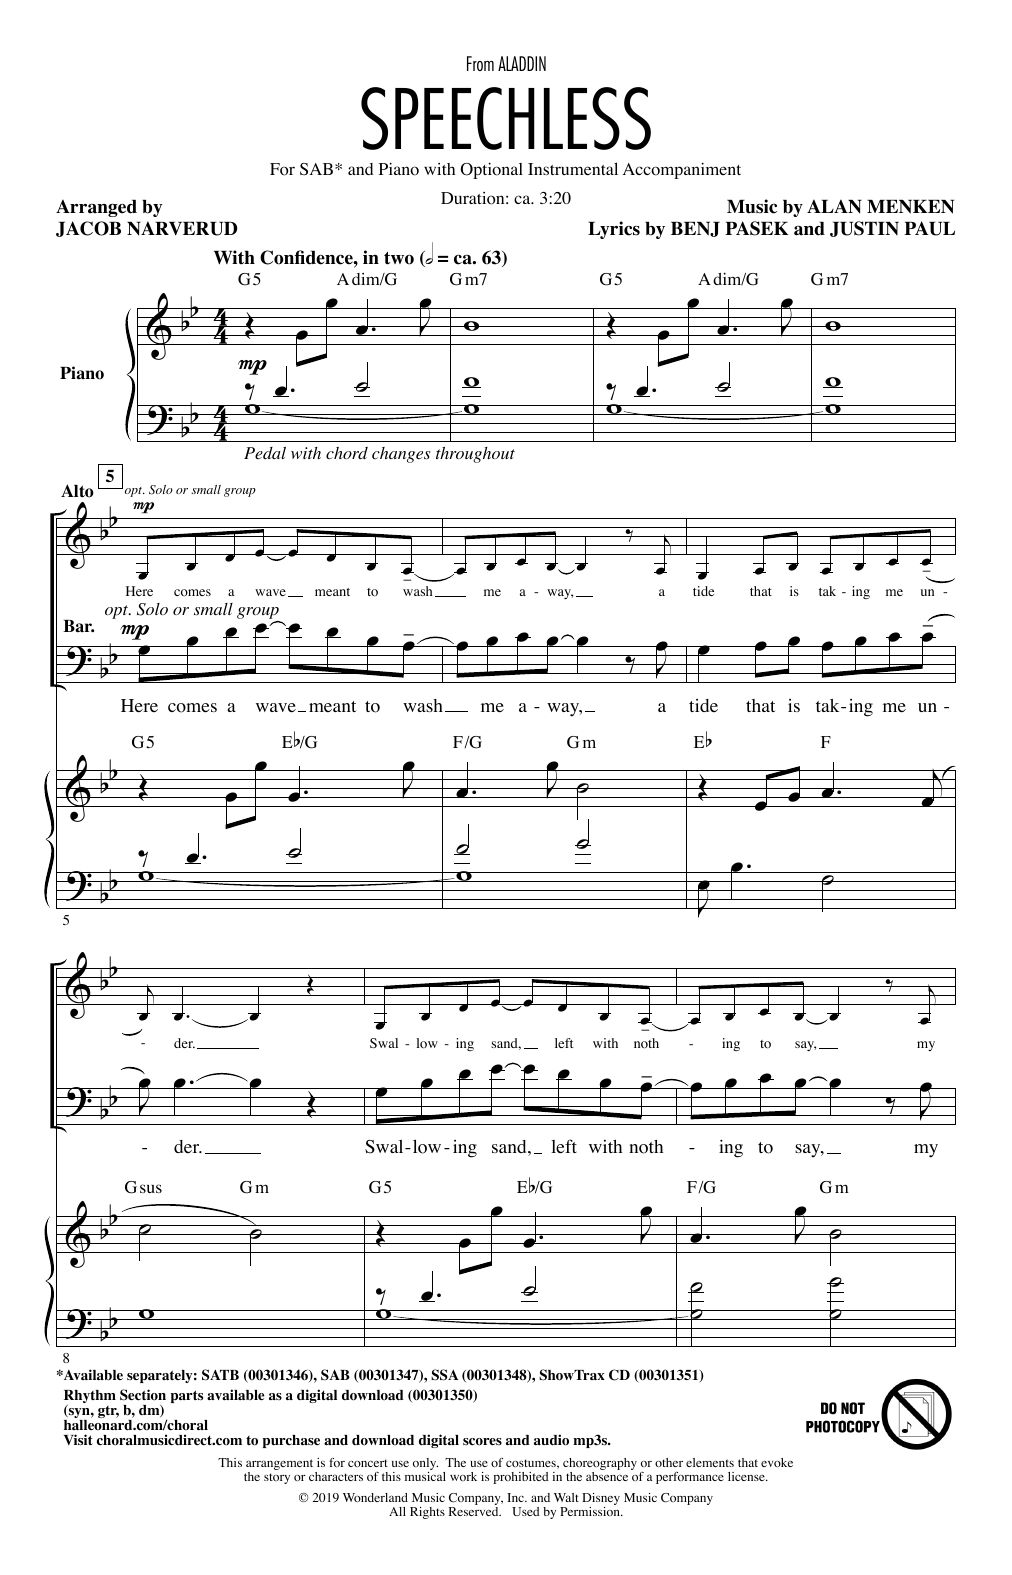 Naomi Scott Speechless (from Disney's Aladdin) (arr. Jacob Narverud) Sheet Music Notes & Chords for SAB Choir - Download or Print PDF